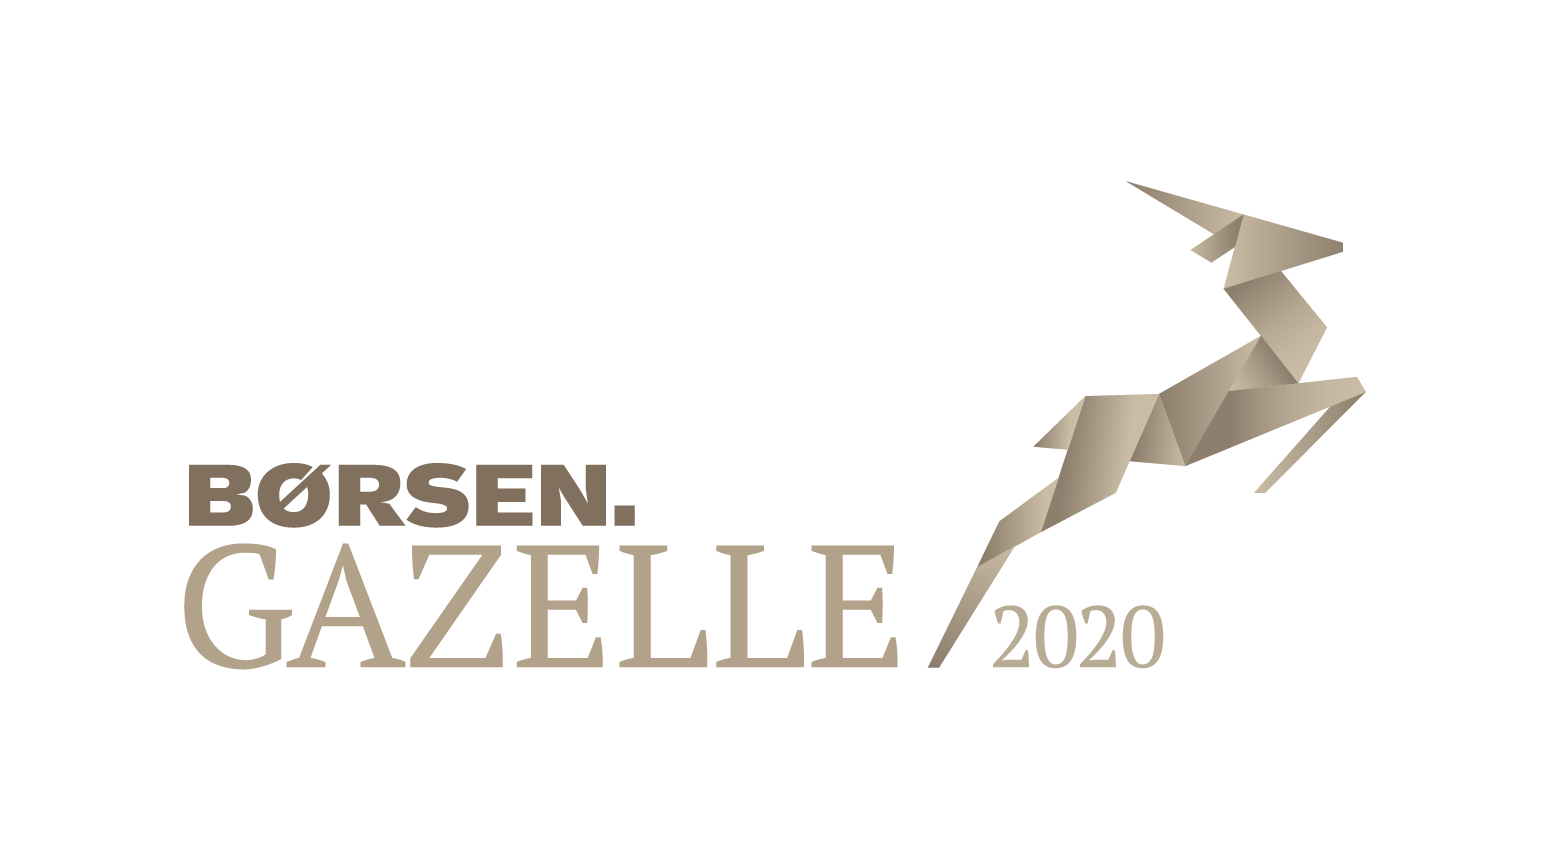 Børsens Gazelle 2020